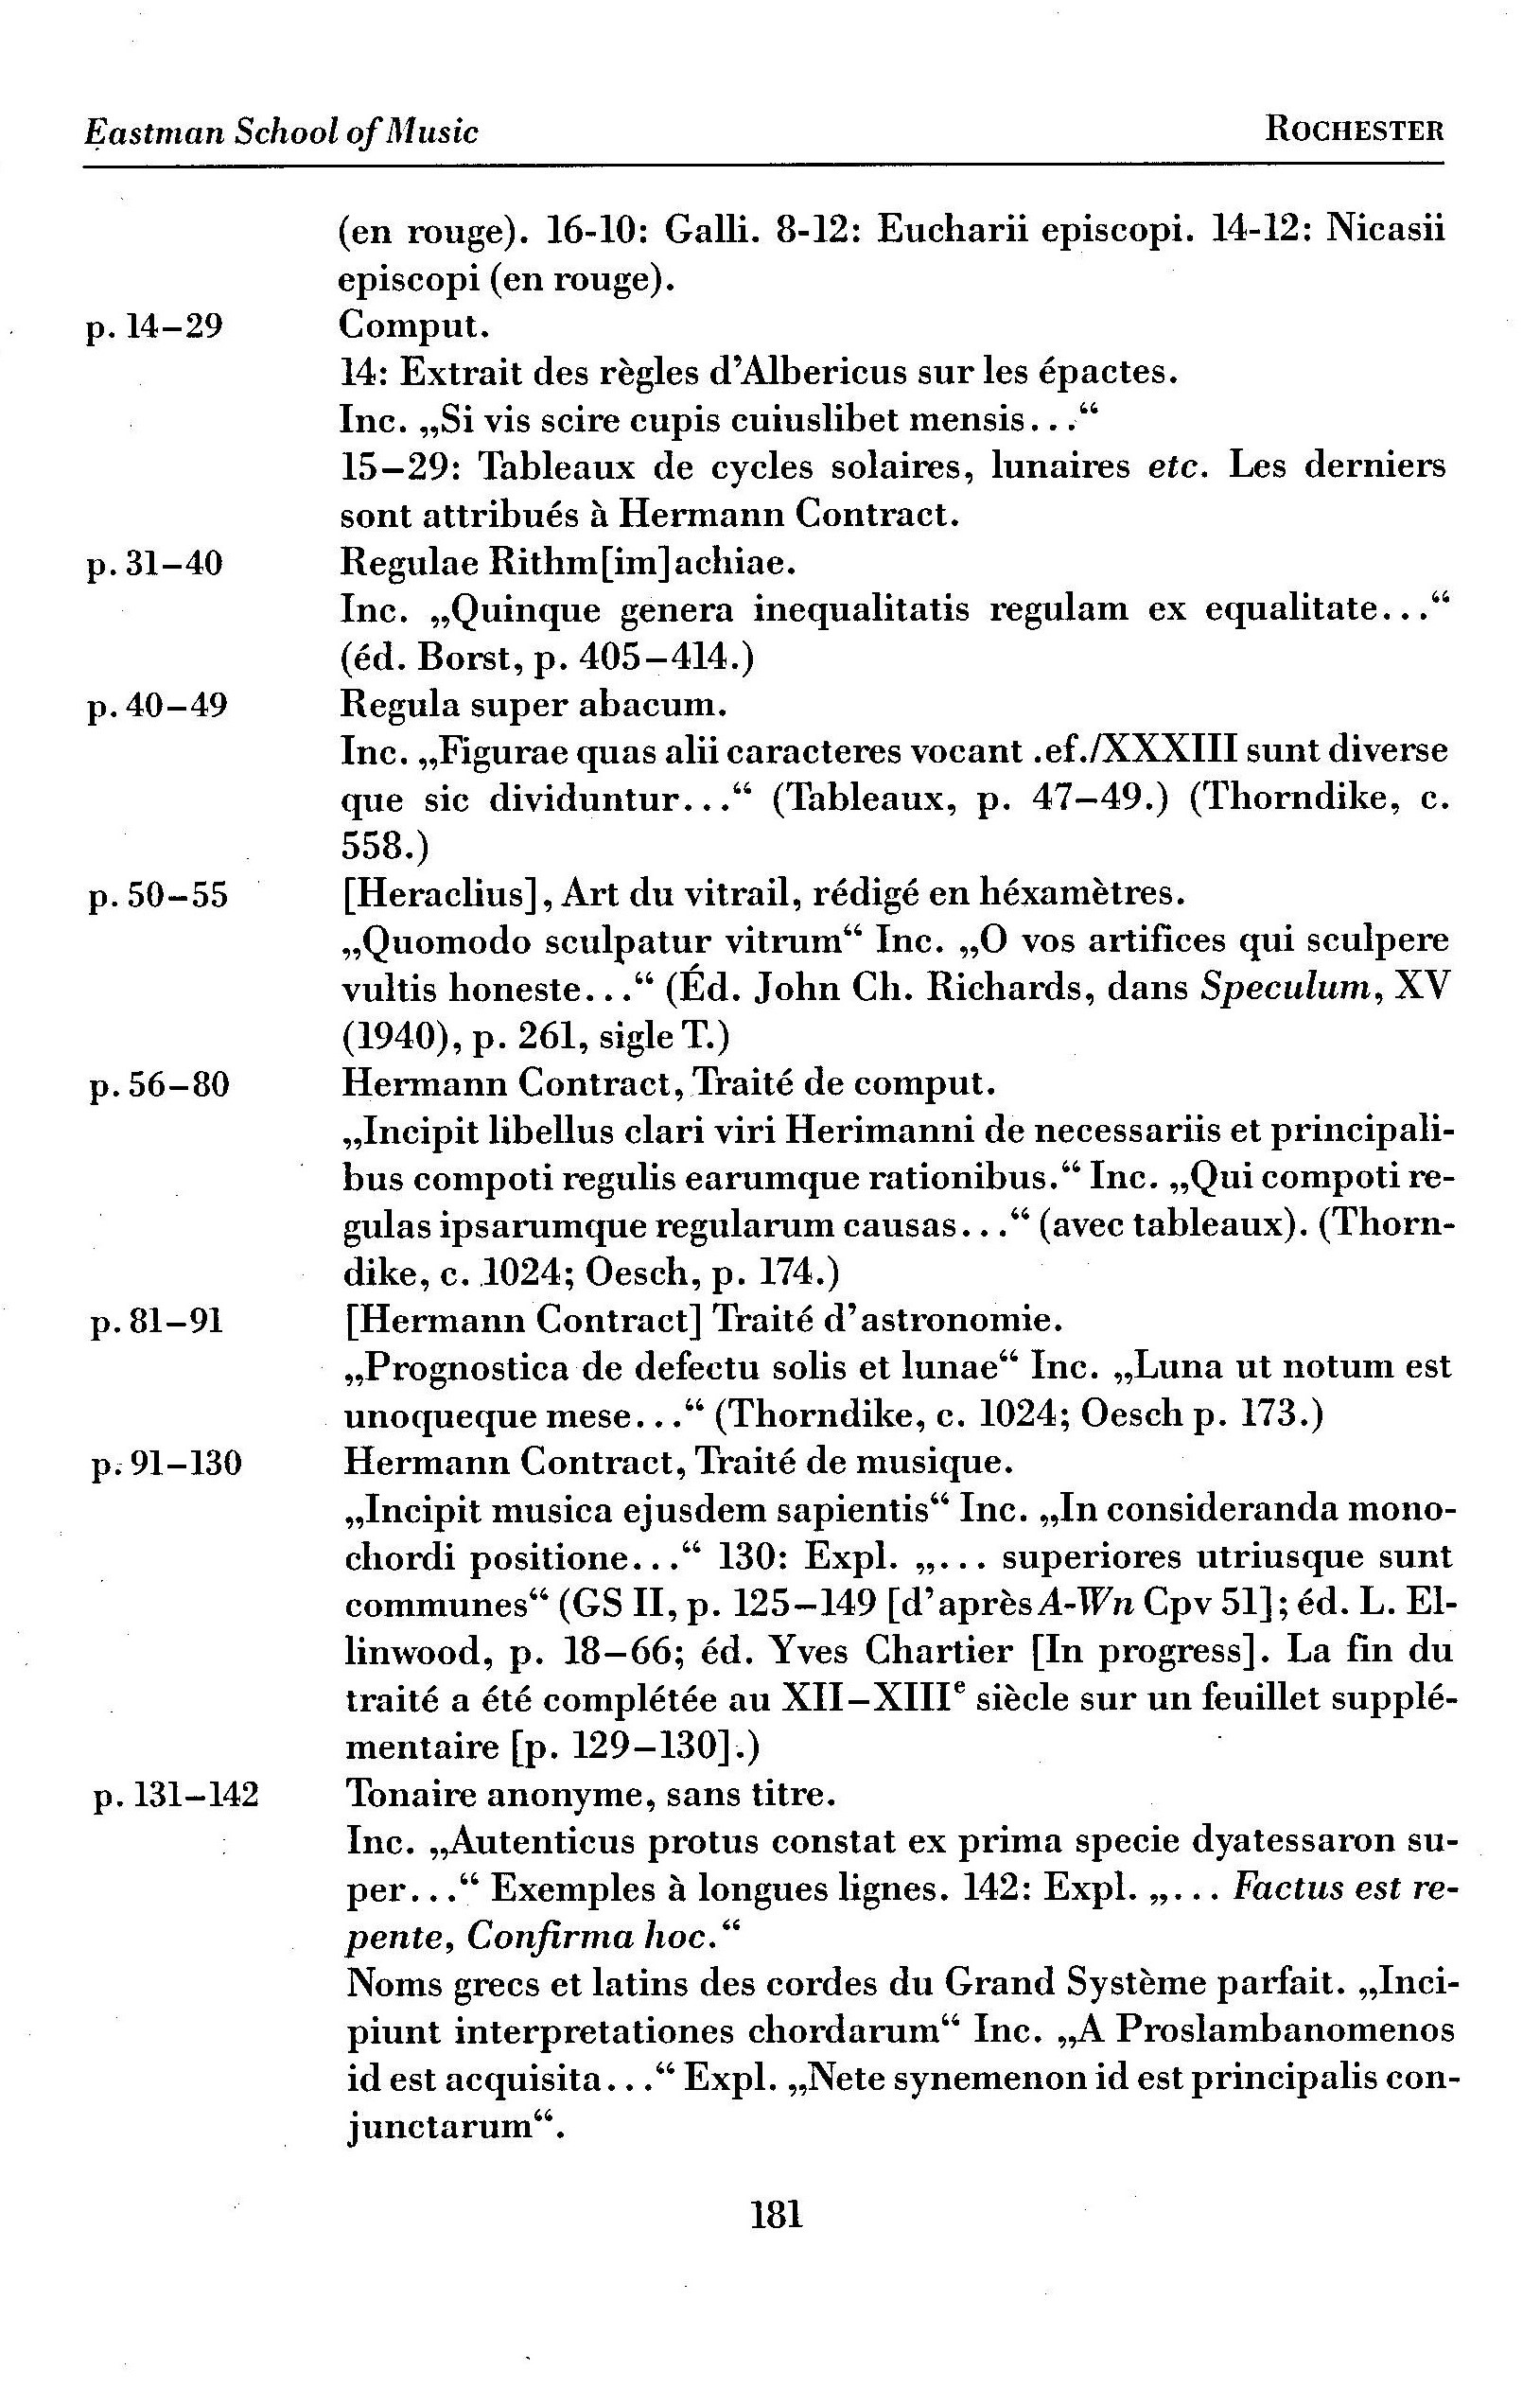 RISM IV, description of Rochester Codex, page 2